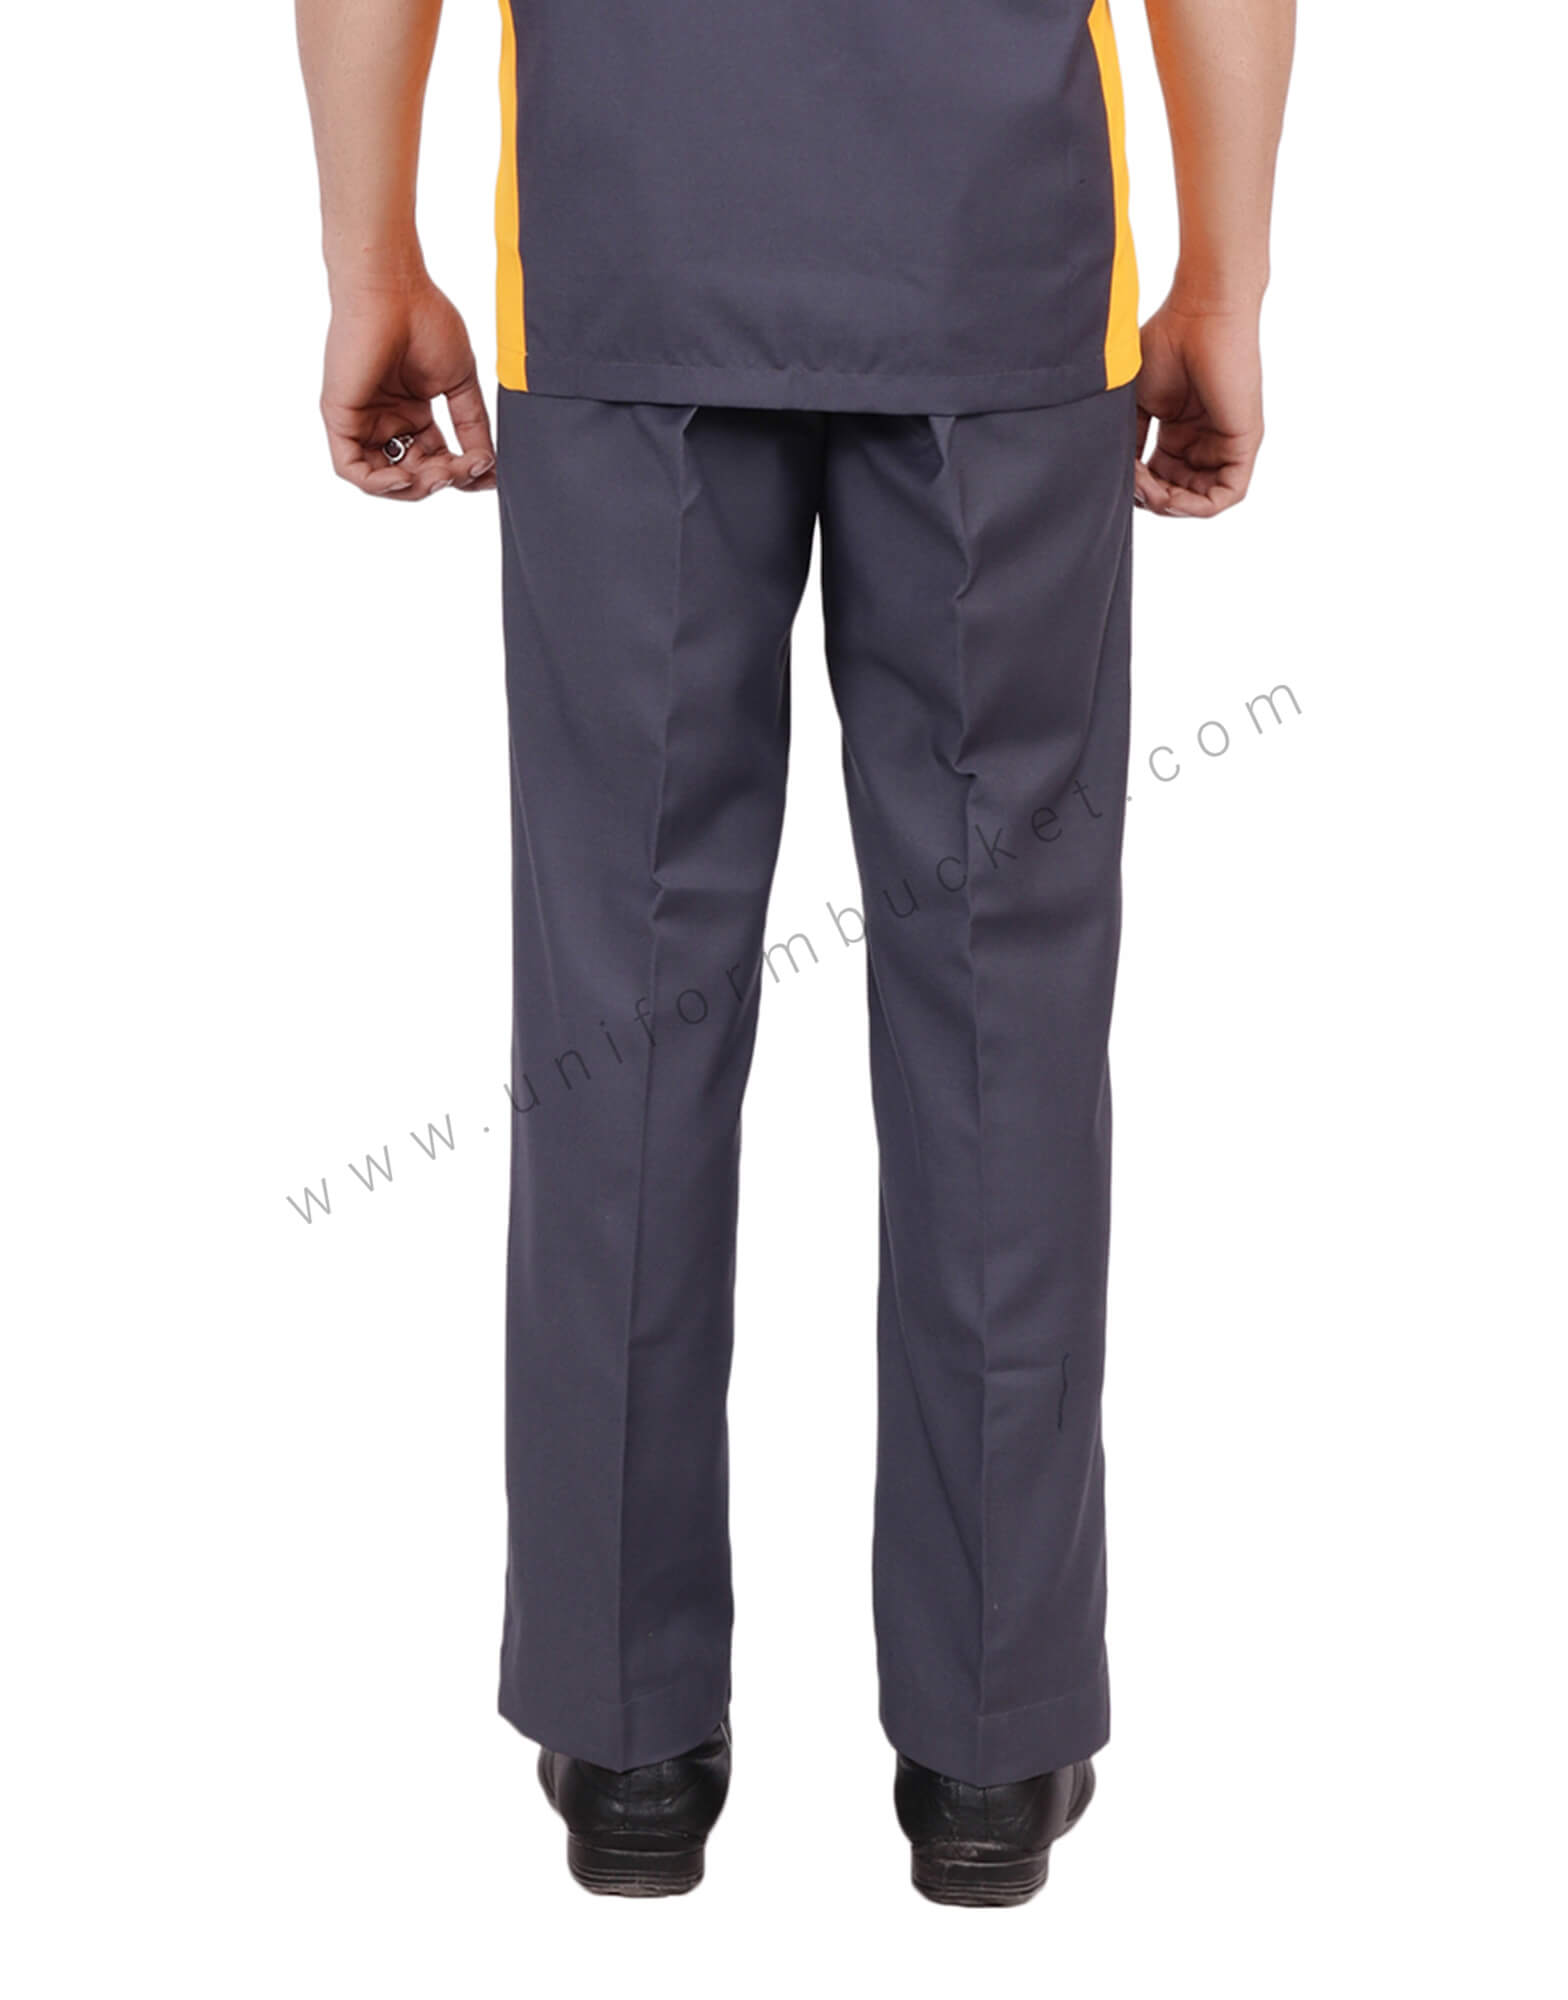 Buy Fashio Men's Heavy Duty Workwear Pants Cordura Reinforcement Warehouse  Safety Trousers (W40-L30, Khaki) at Amazon.in